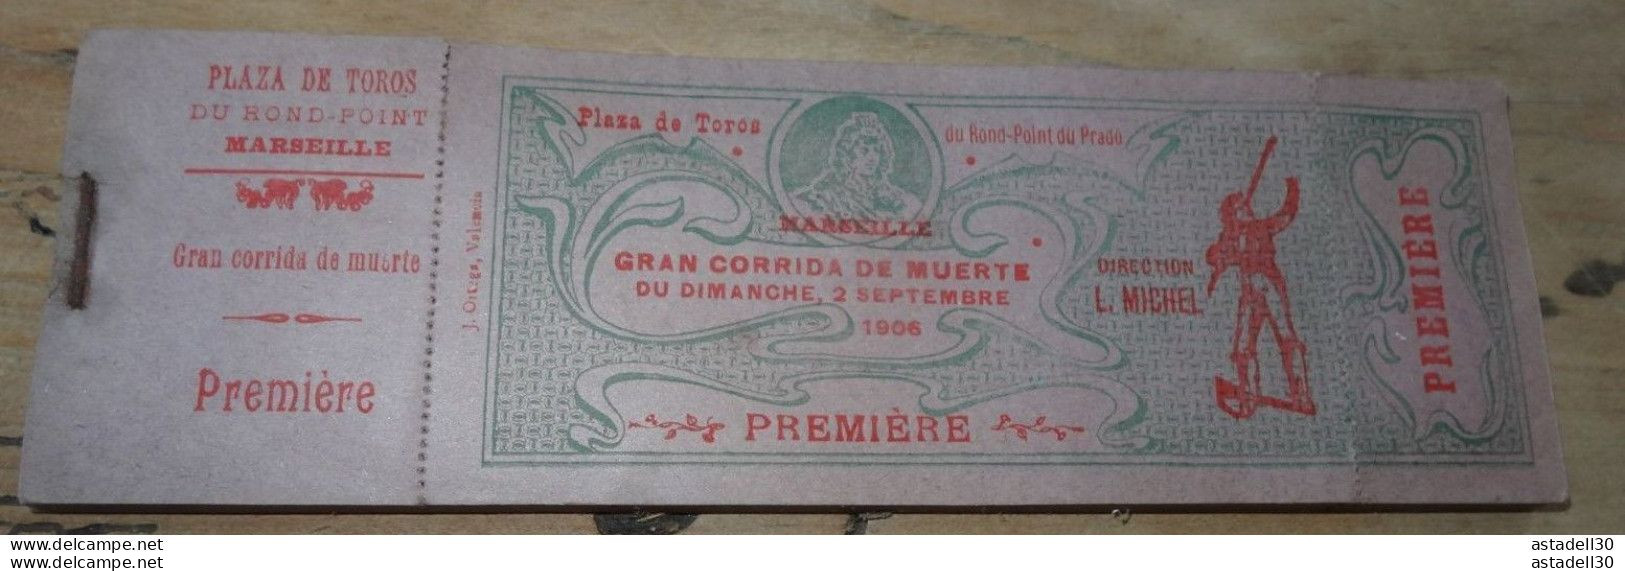 Ticket Entrée GRAN CORRIDA DE MUERTE, 02/09/1906, Plaza De Toros MARSEILLE ............. TIC-COR1..... Caisse9 - Tickets - Entradas